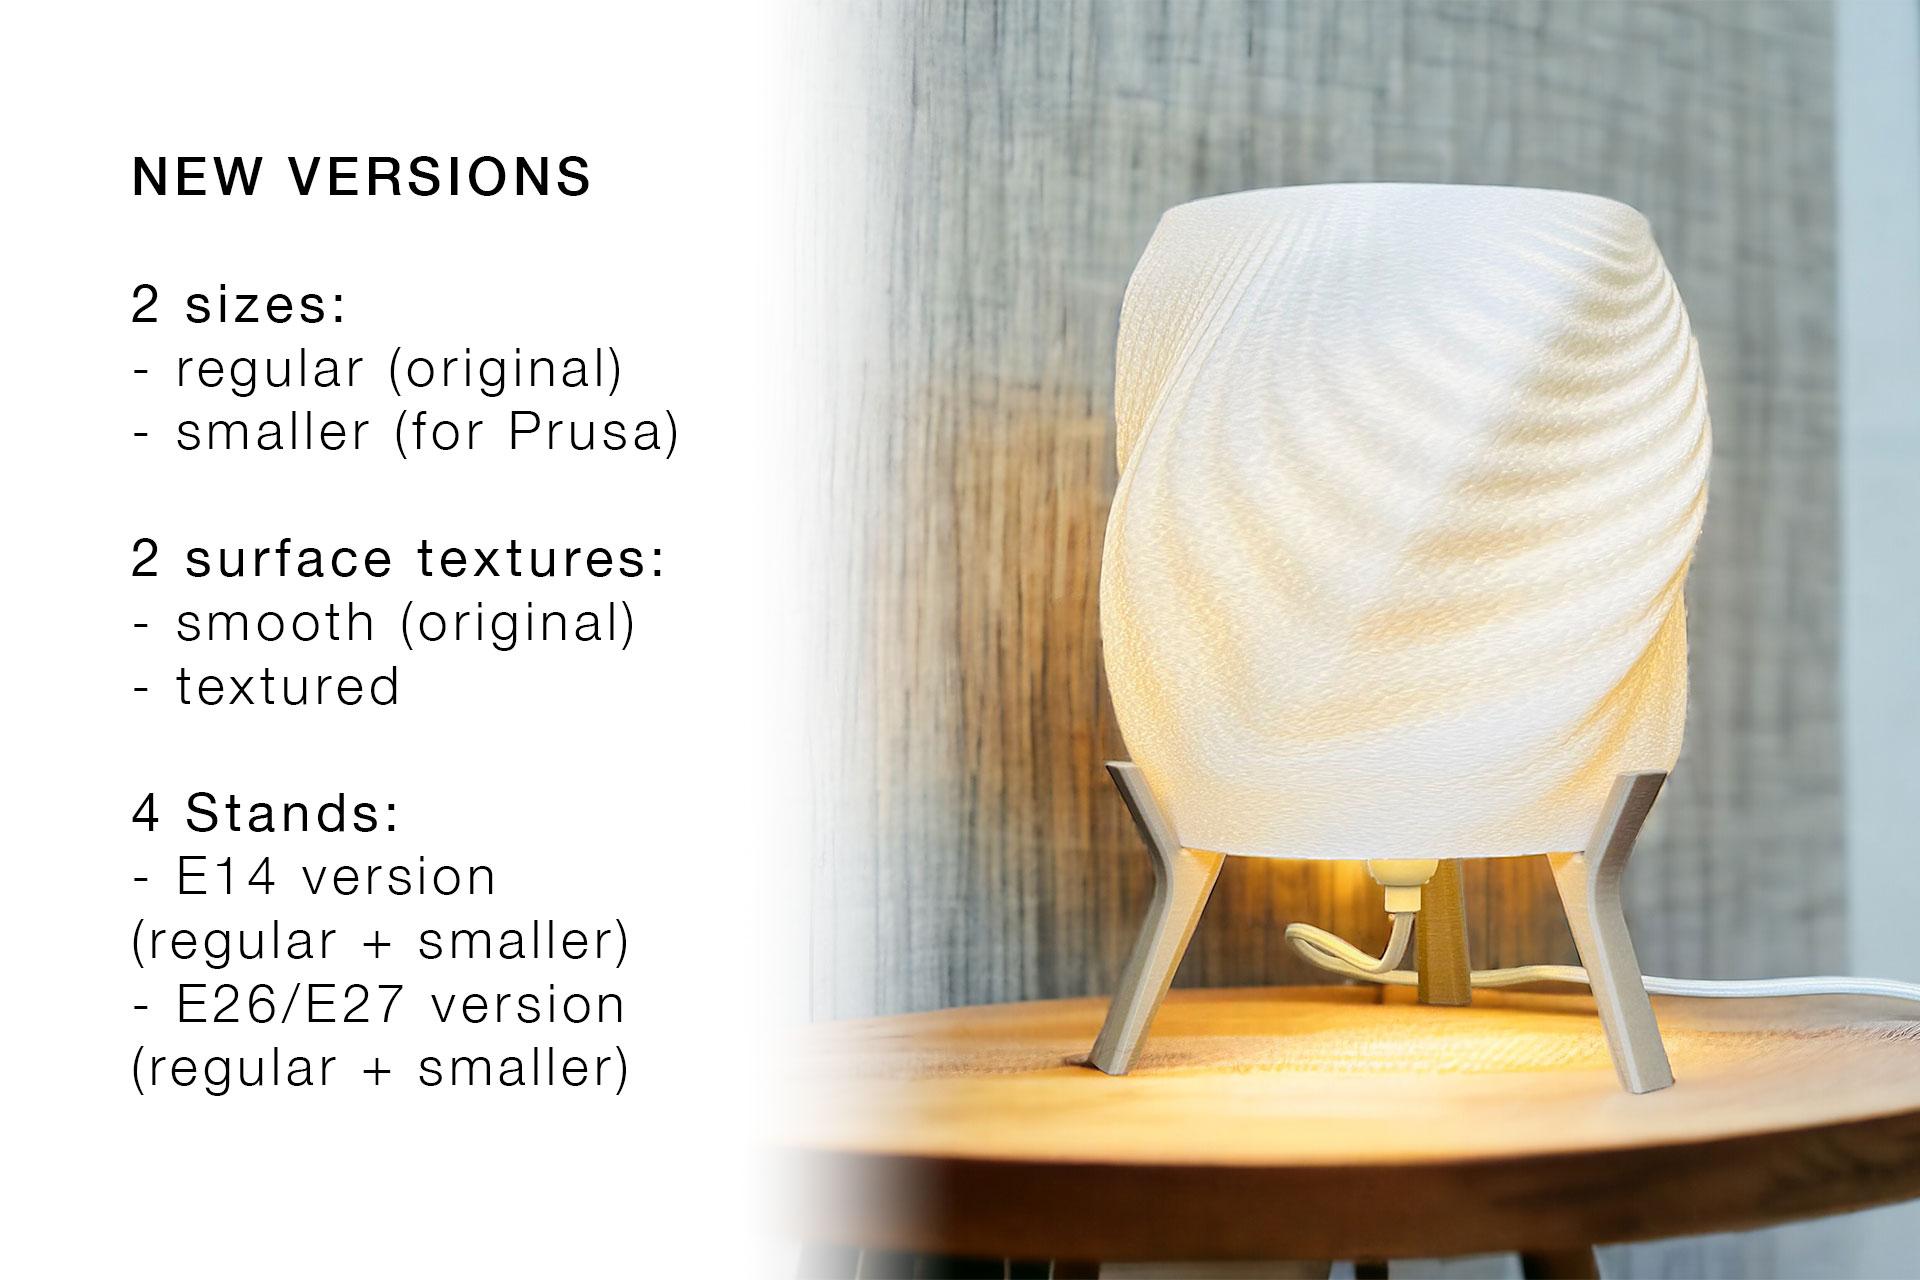 Draped Elegance table lamp
design variations